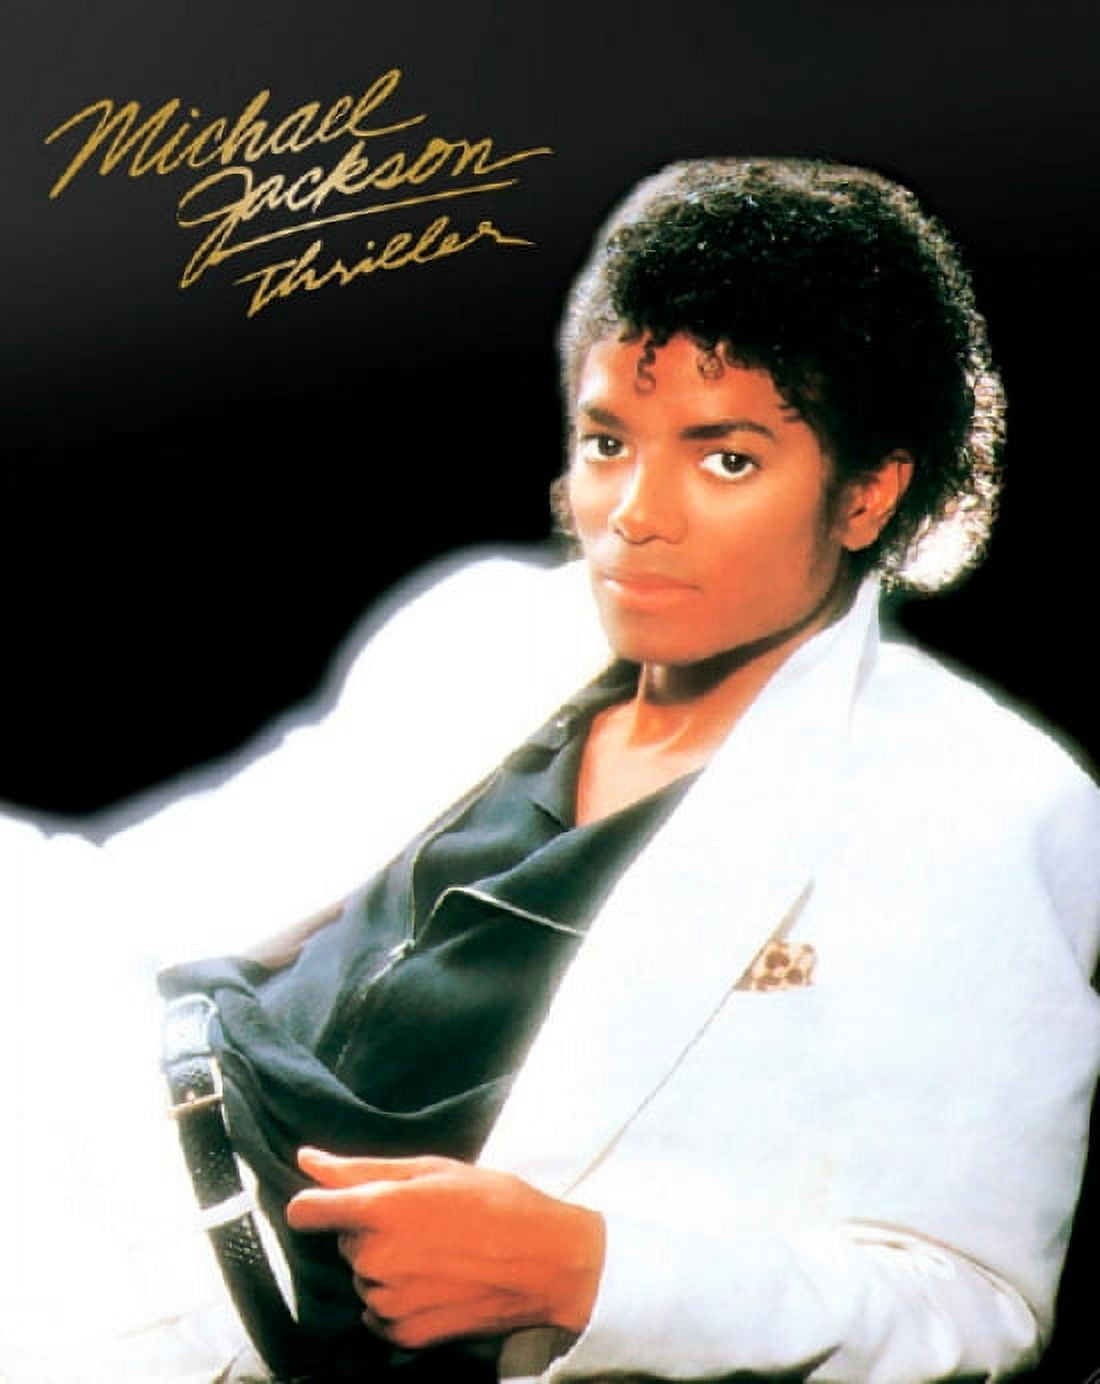 Michael Jackson - Thriller Poster (16 x 20)